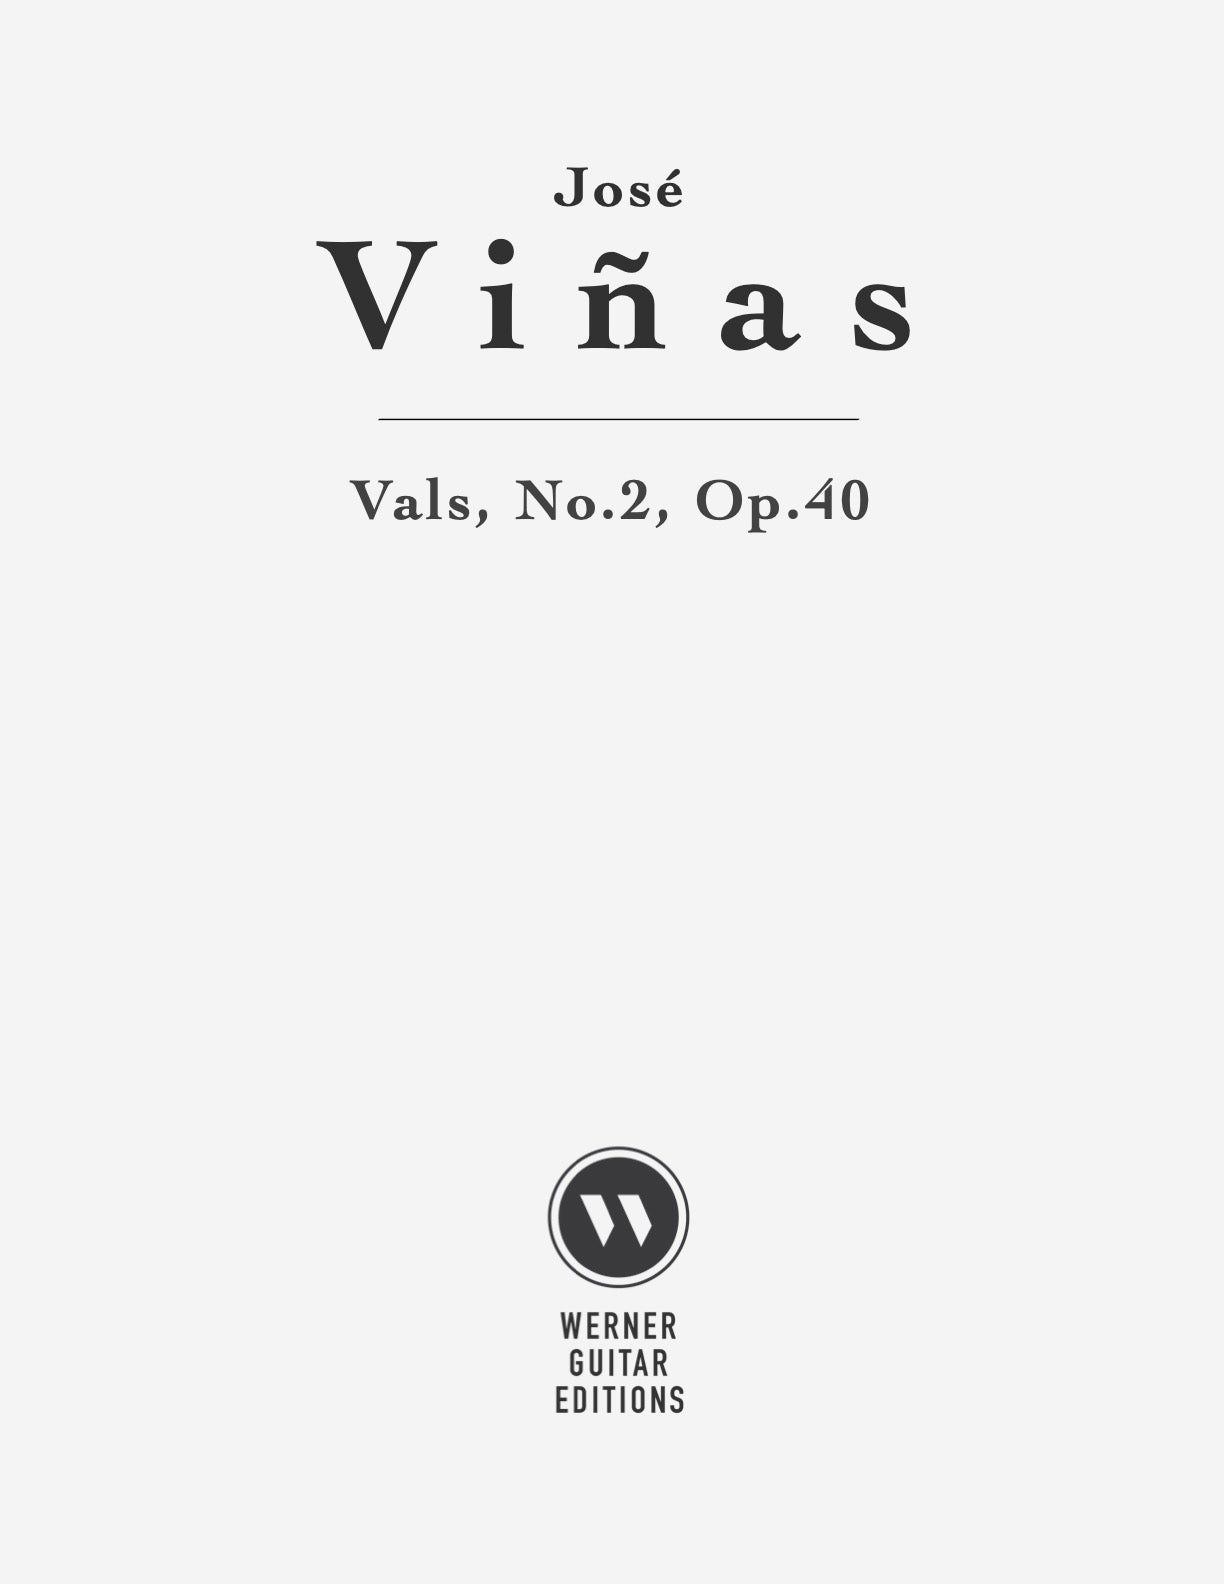 Vals, No.2, Op.40 by Vinas (PDF Sheet Music)